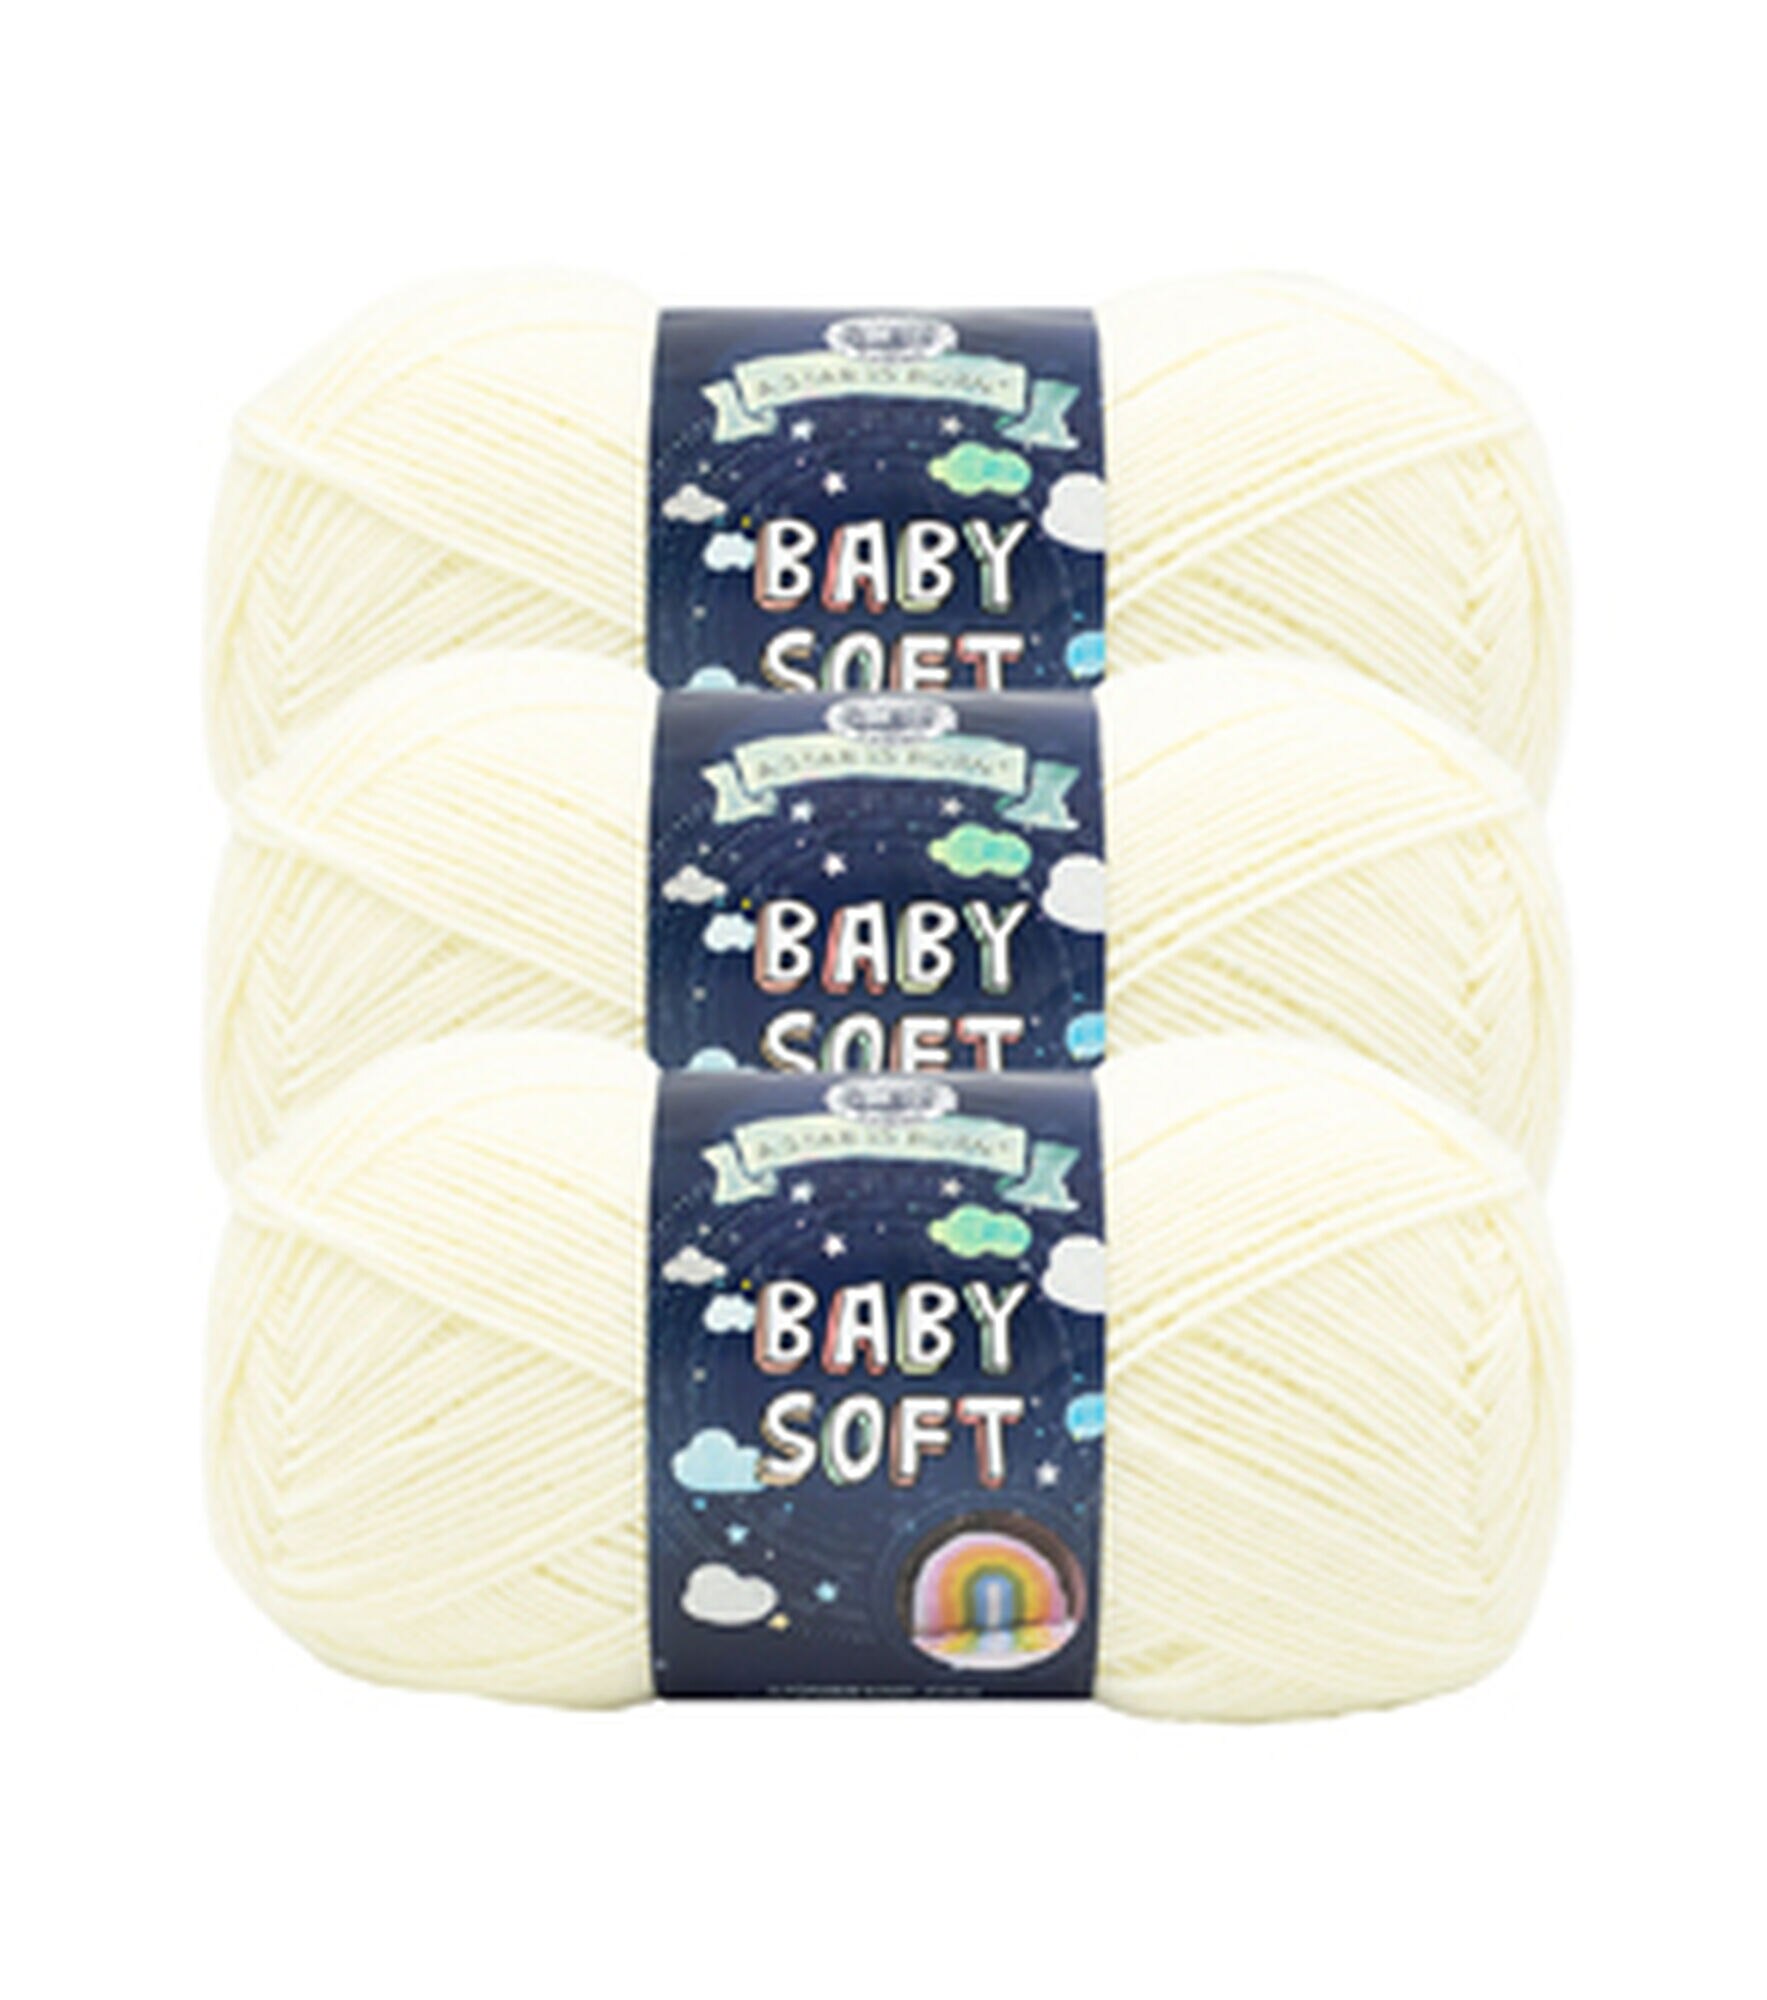 Bernat Light Weight Acrylic Softee Baby Yarn 2 Bundle